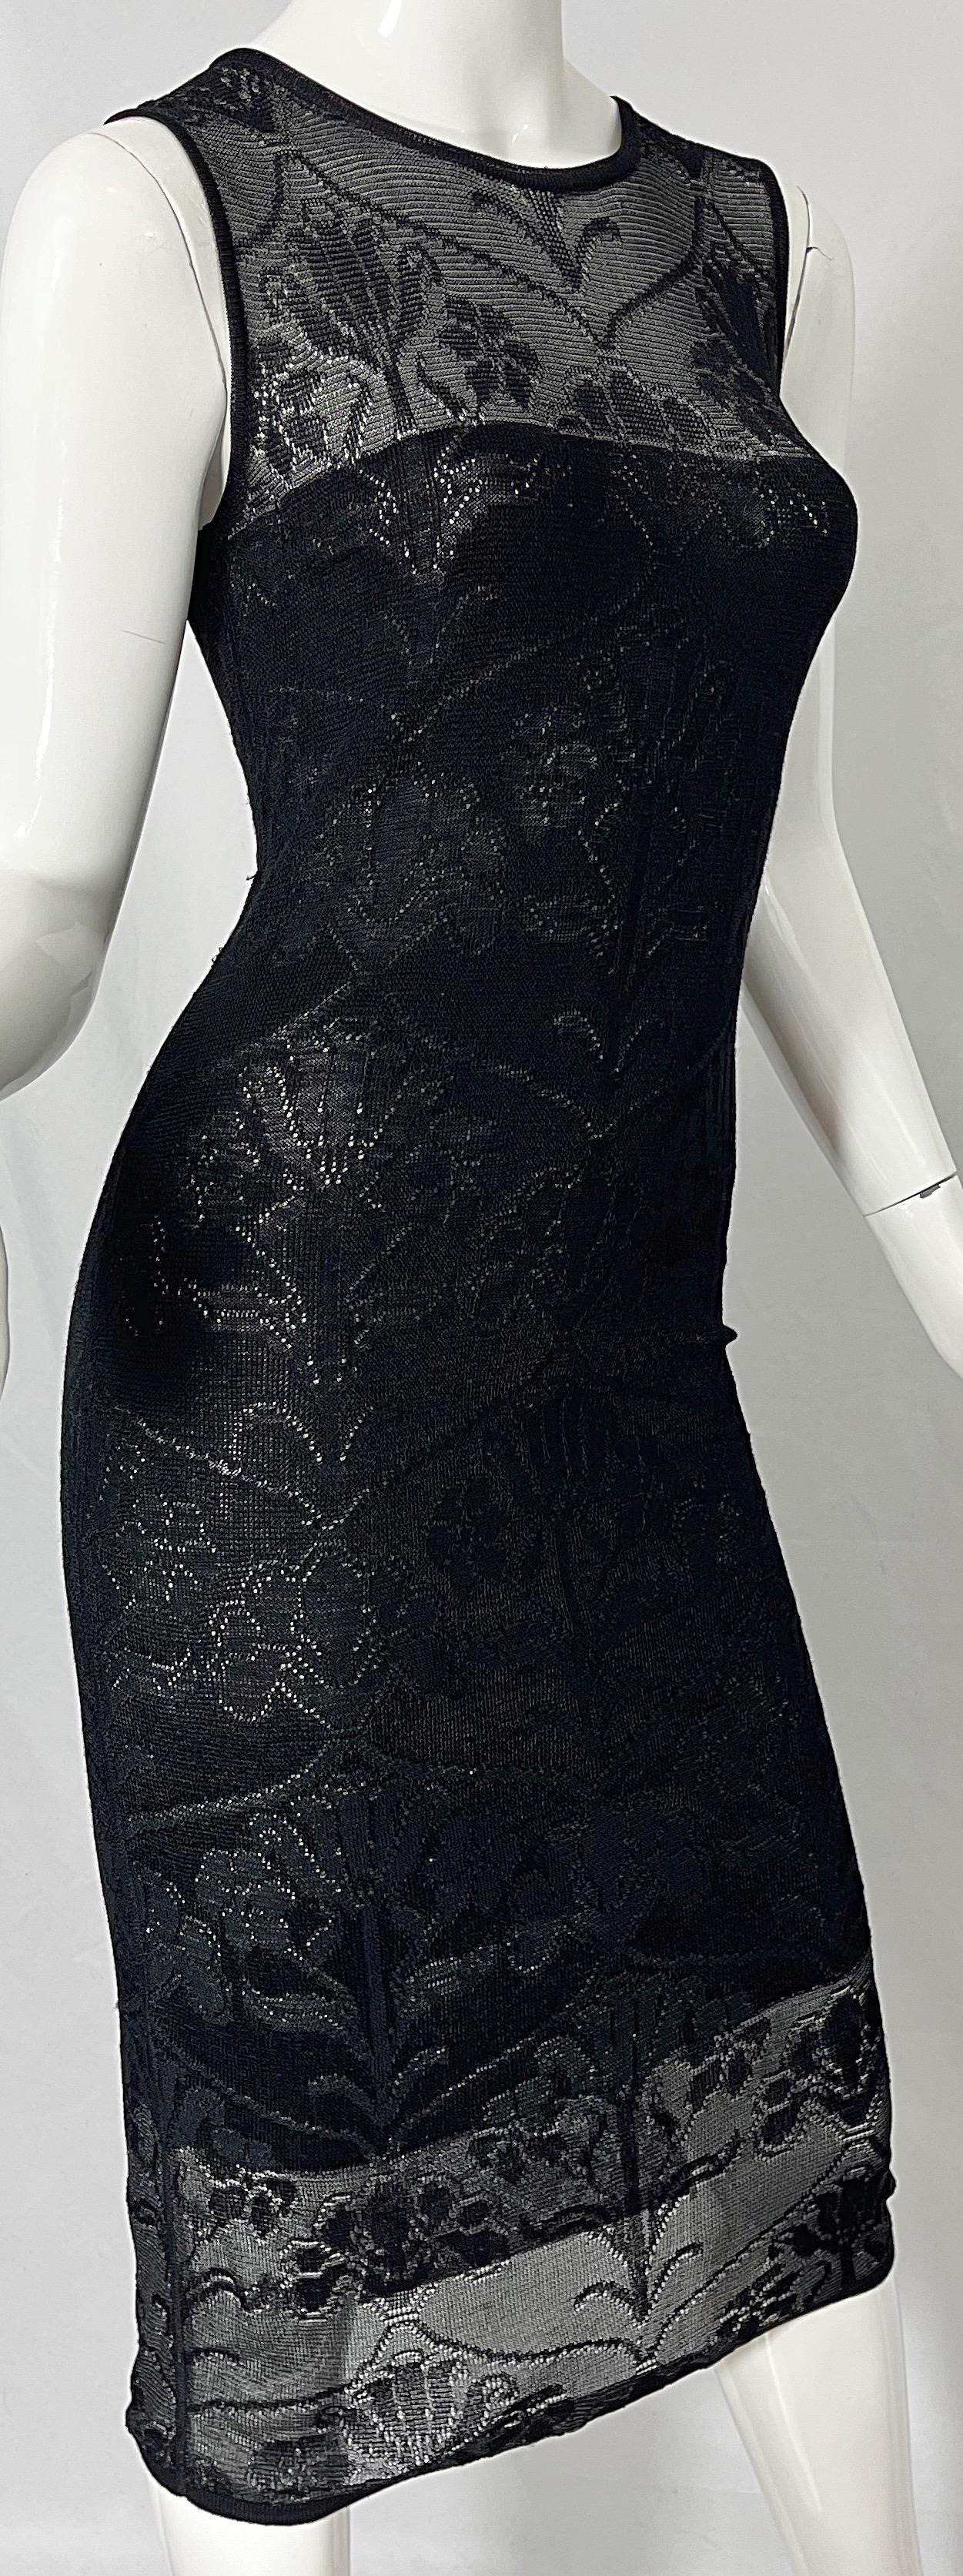 Krizia 1990s Black Crochet Embroidered Semi Sheer Sleeveless Vintage 90s Dress For Sale 6